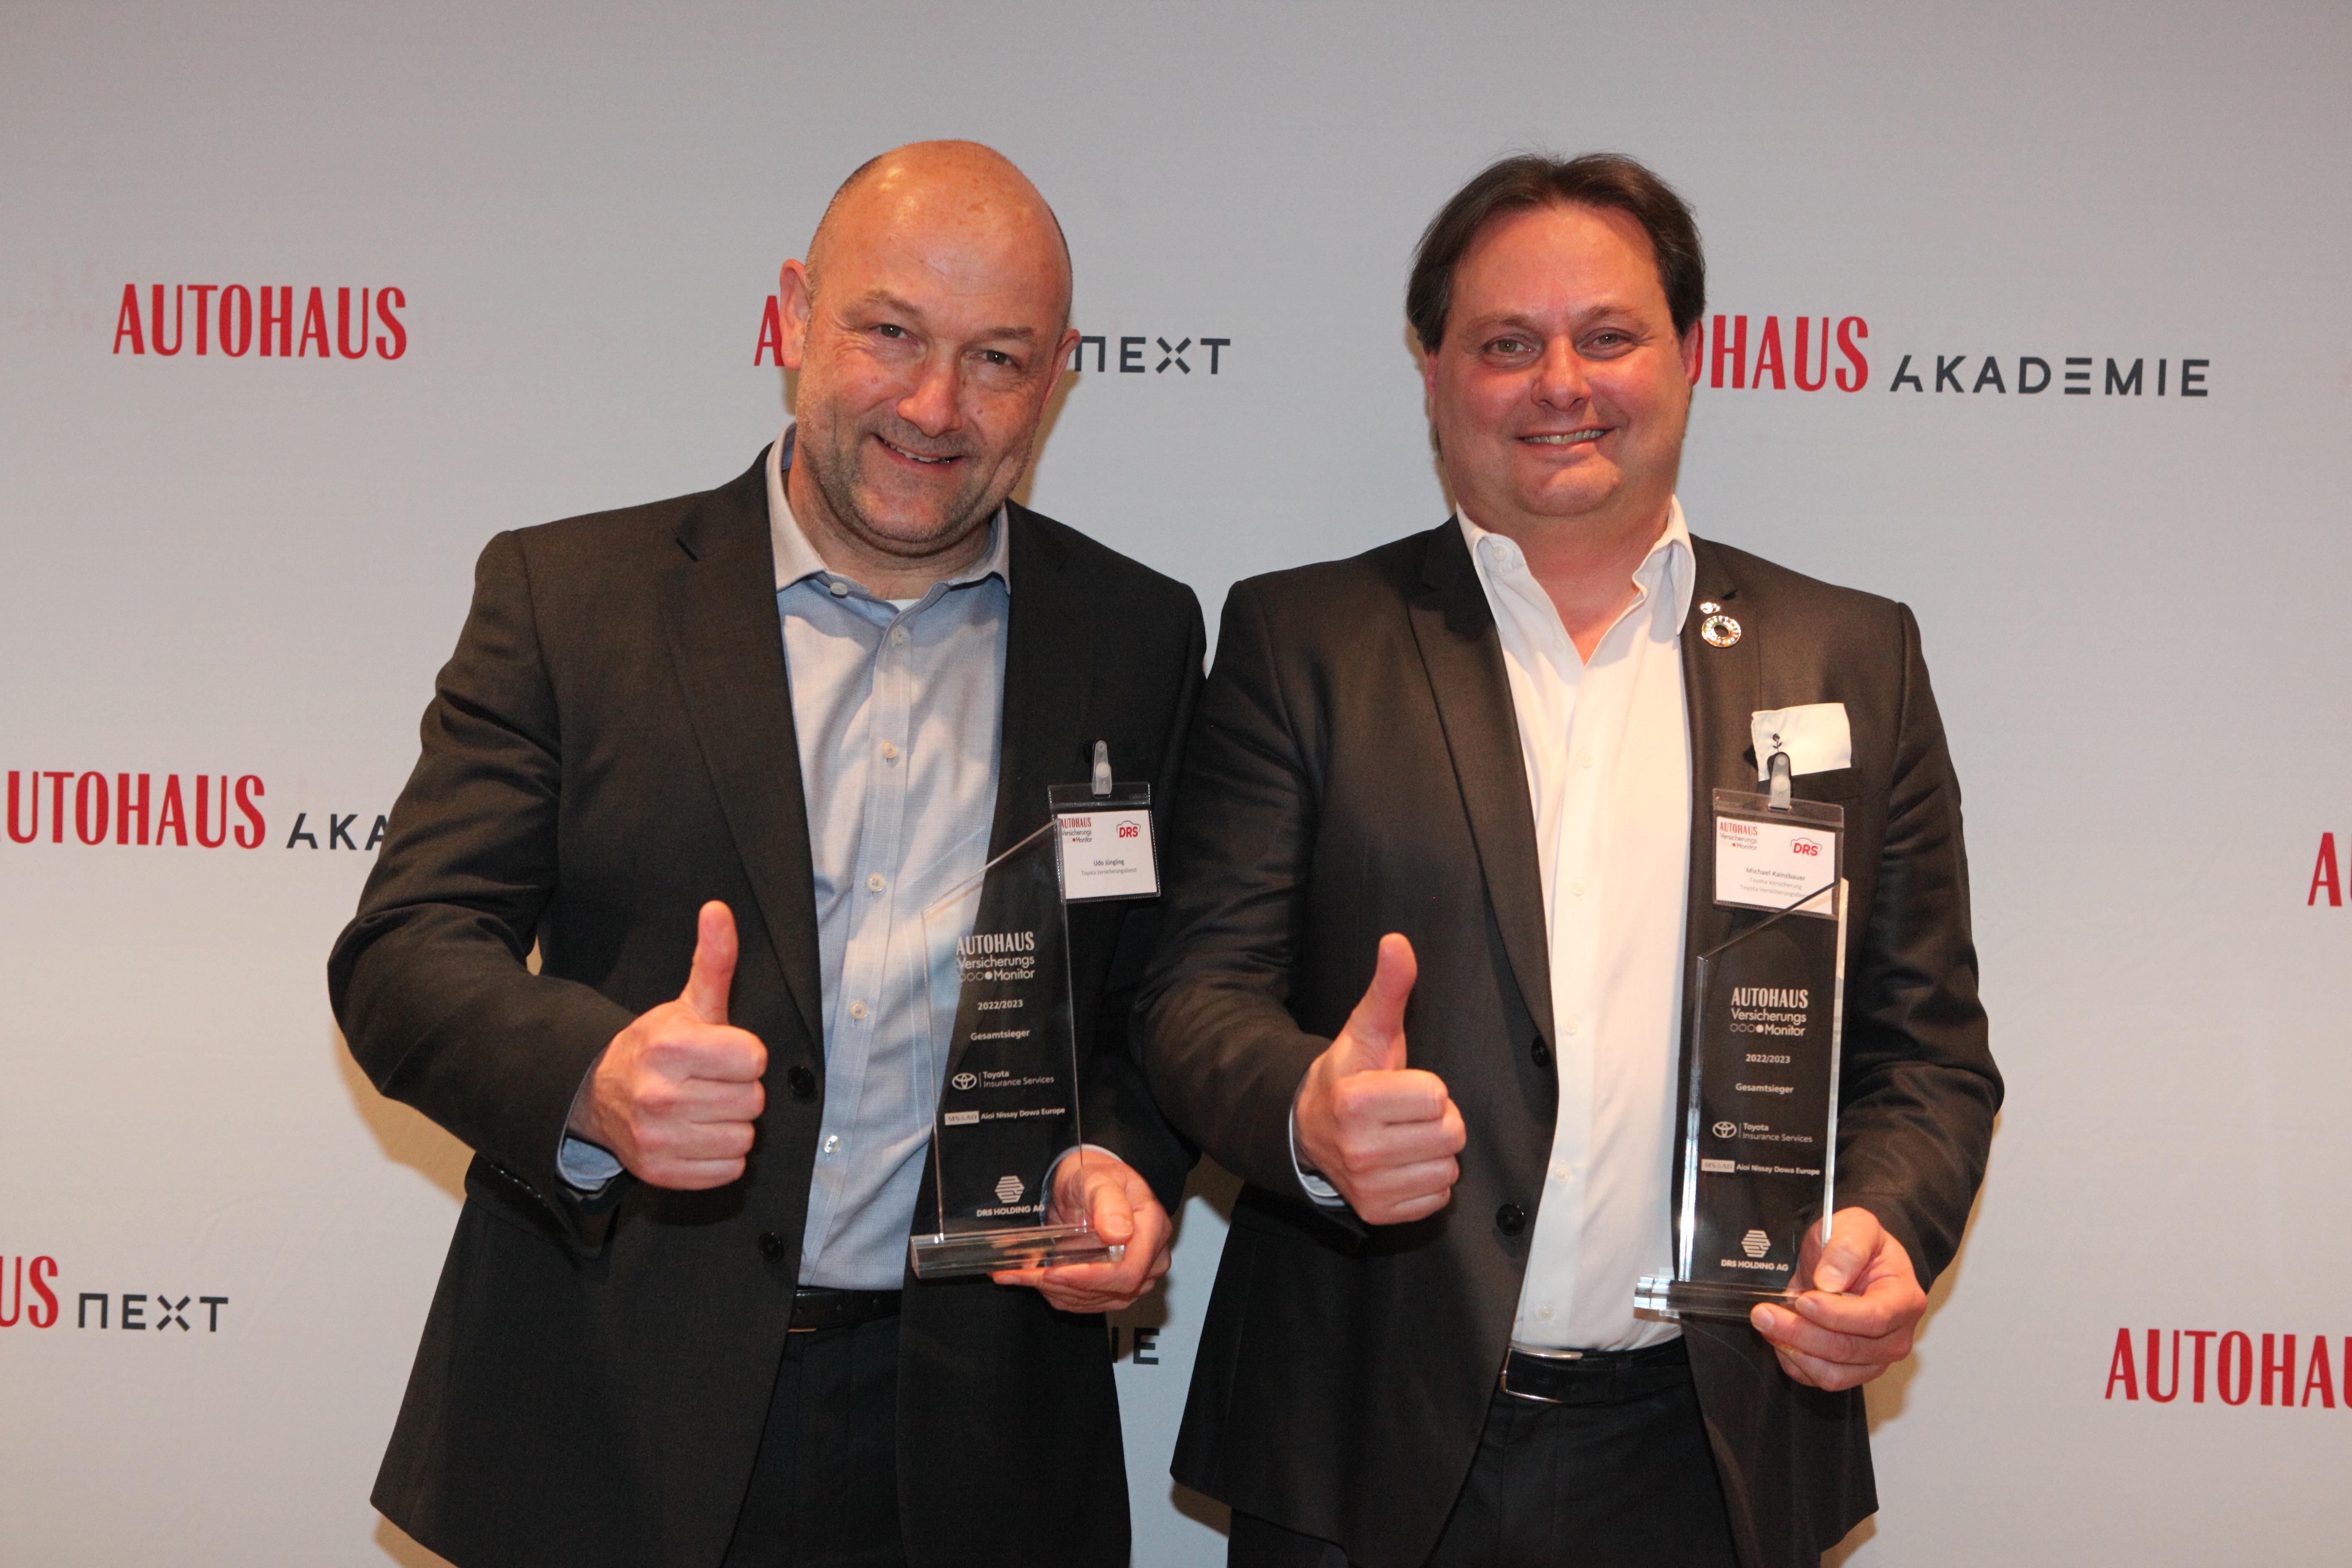 Udo Jüngling and Michael Kainzbauer received the Ichiban award